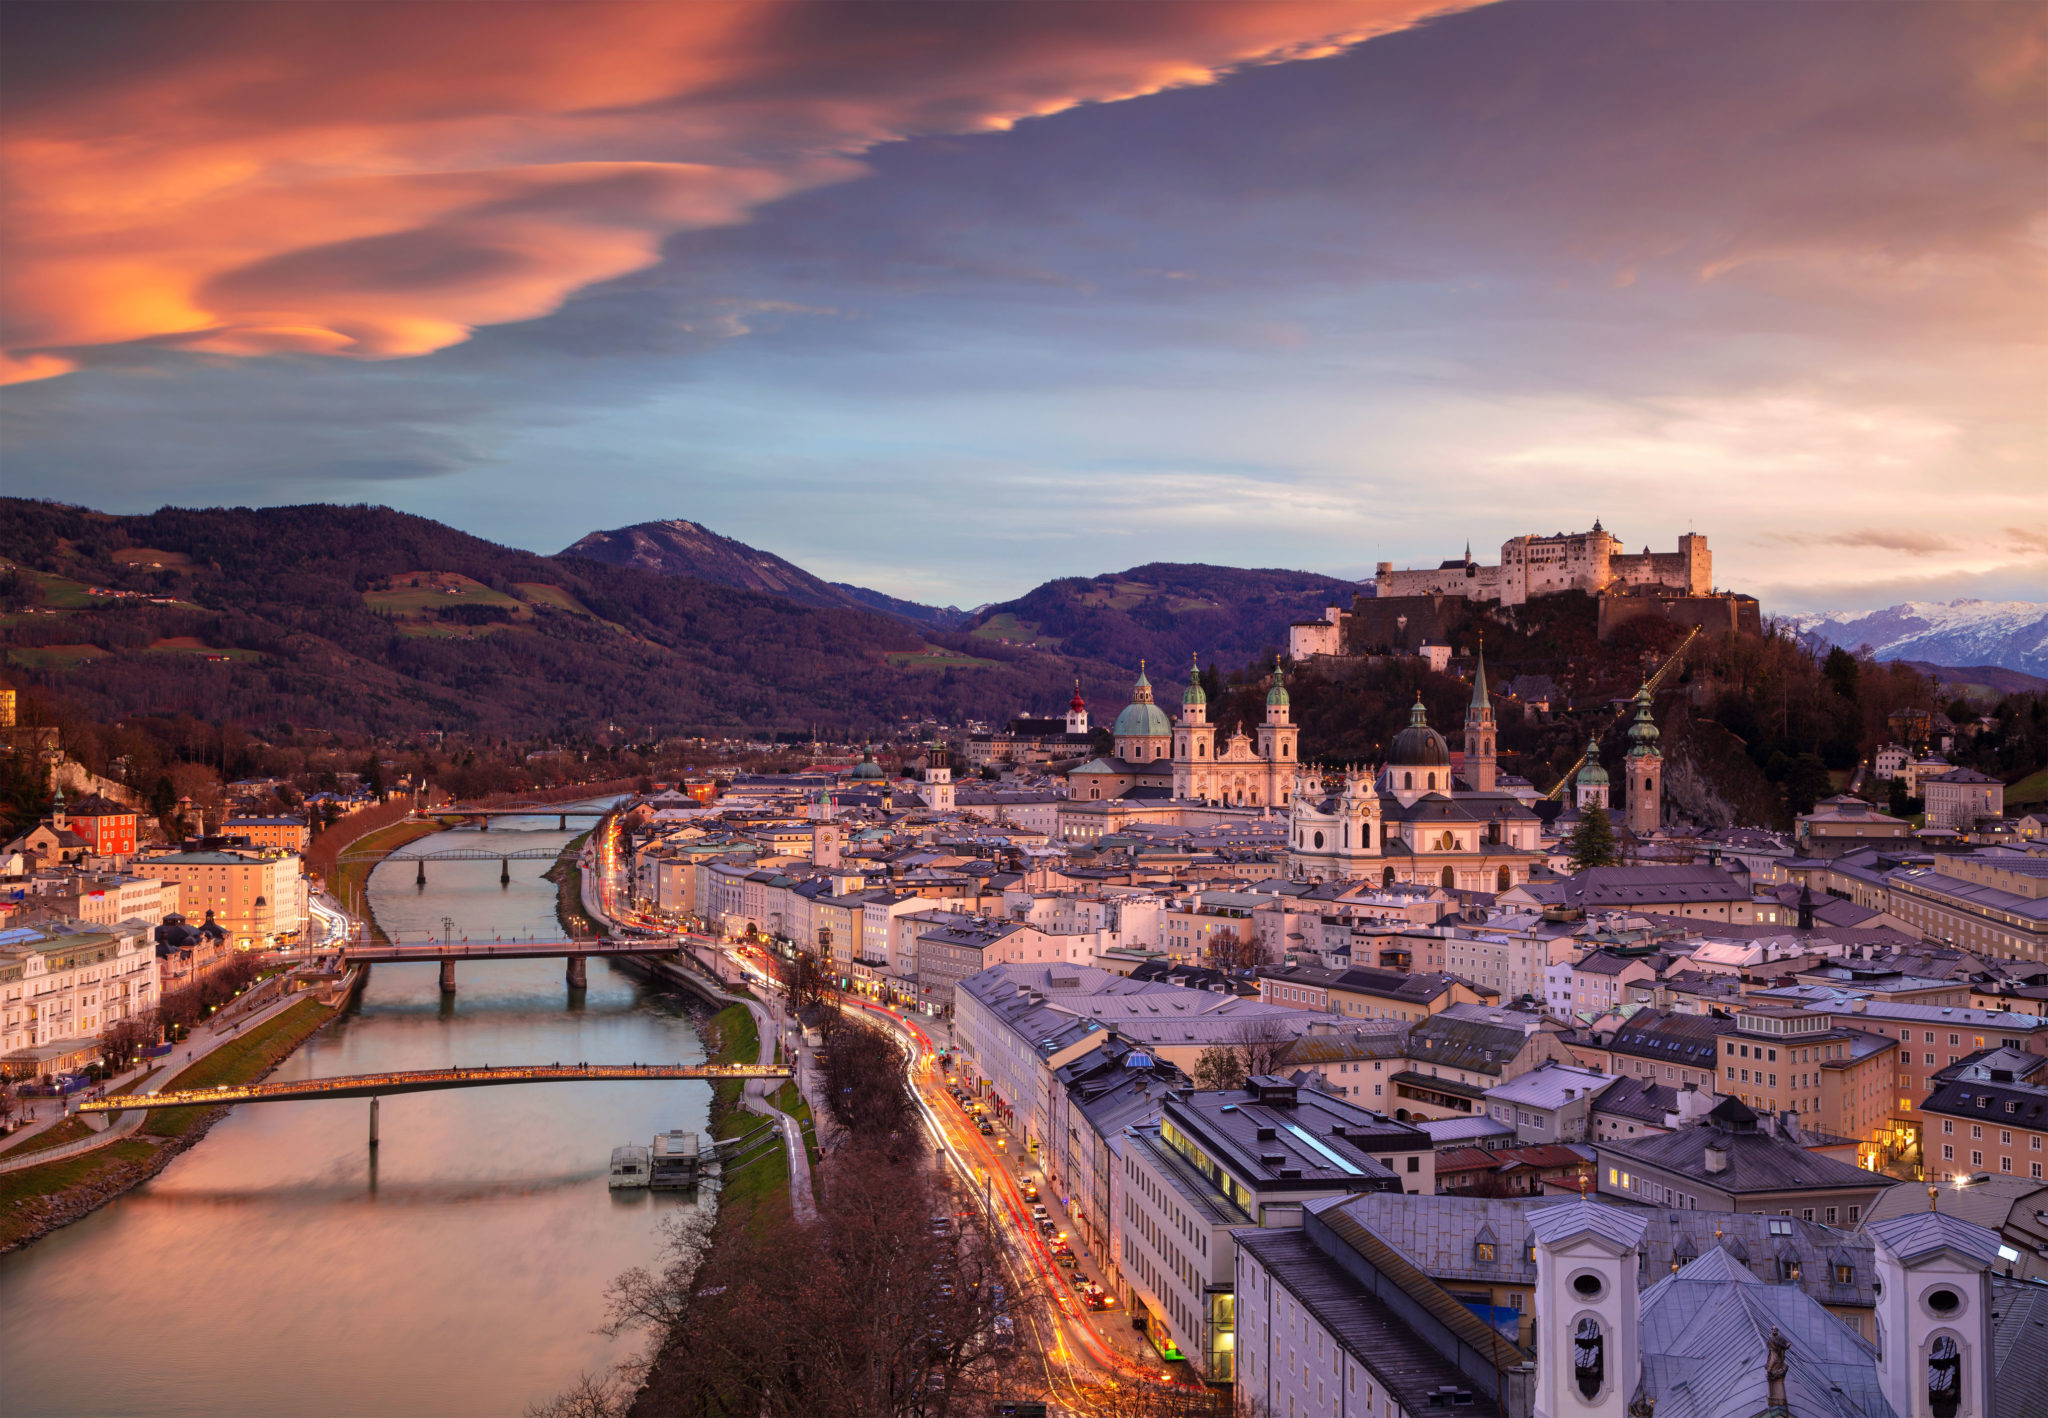 A view of Salzburg, Austria